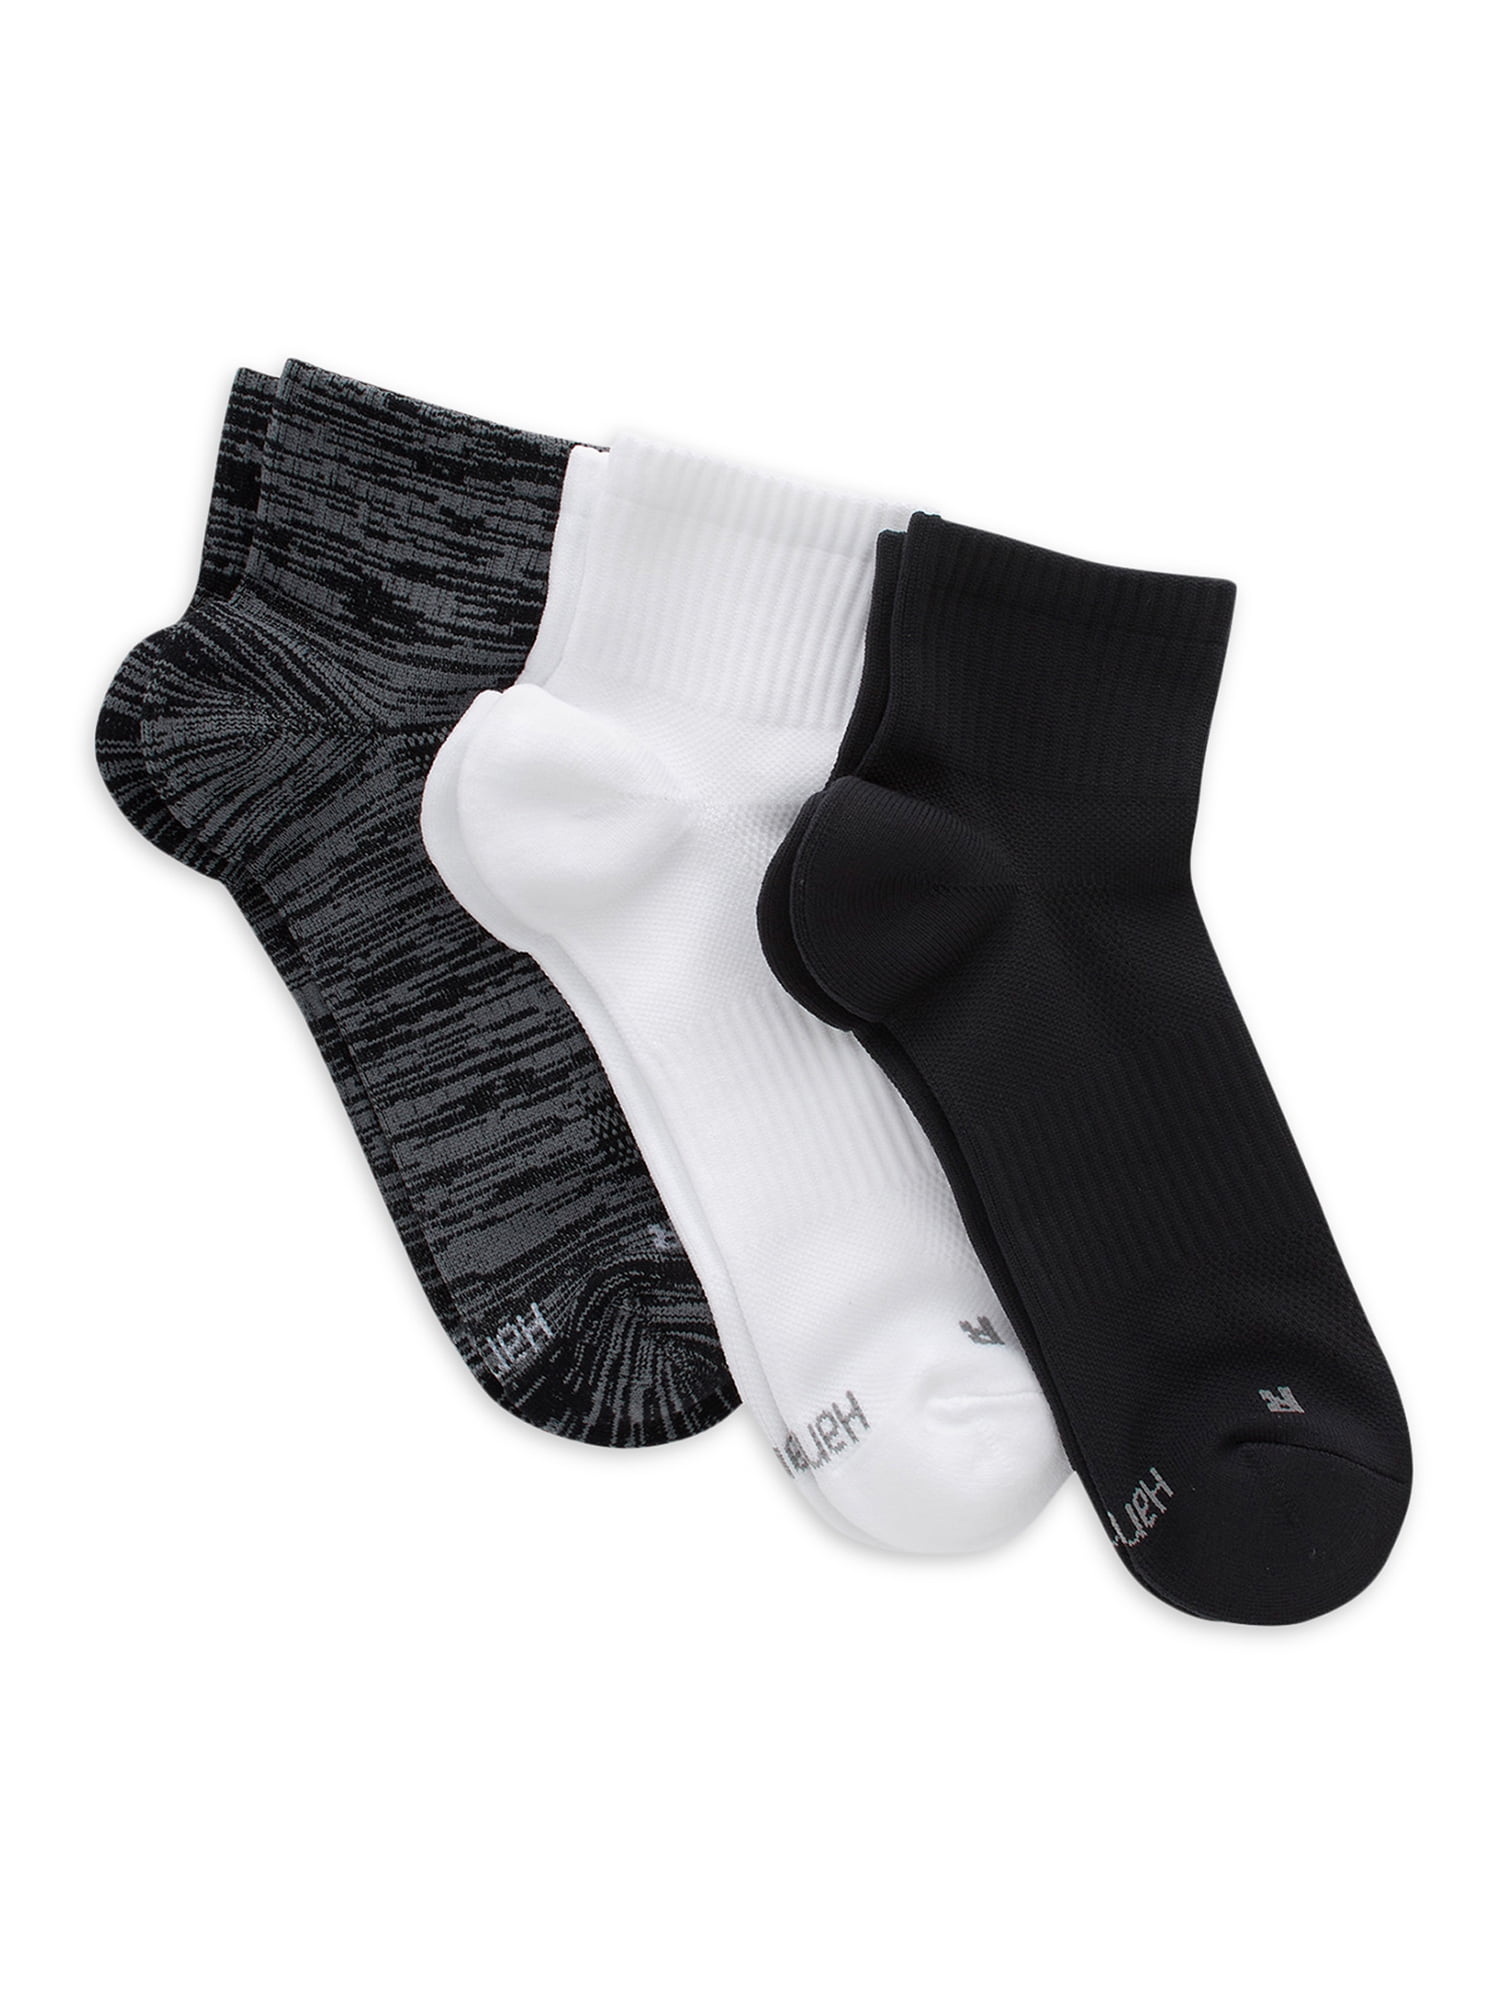 Hanes Men's X-Temp Performance Nylon Ankle Socks, 3-Pack - Walmart.com